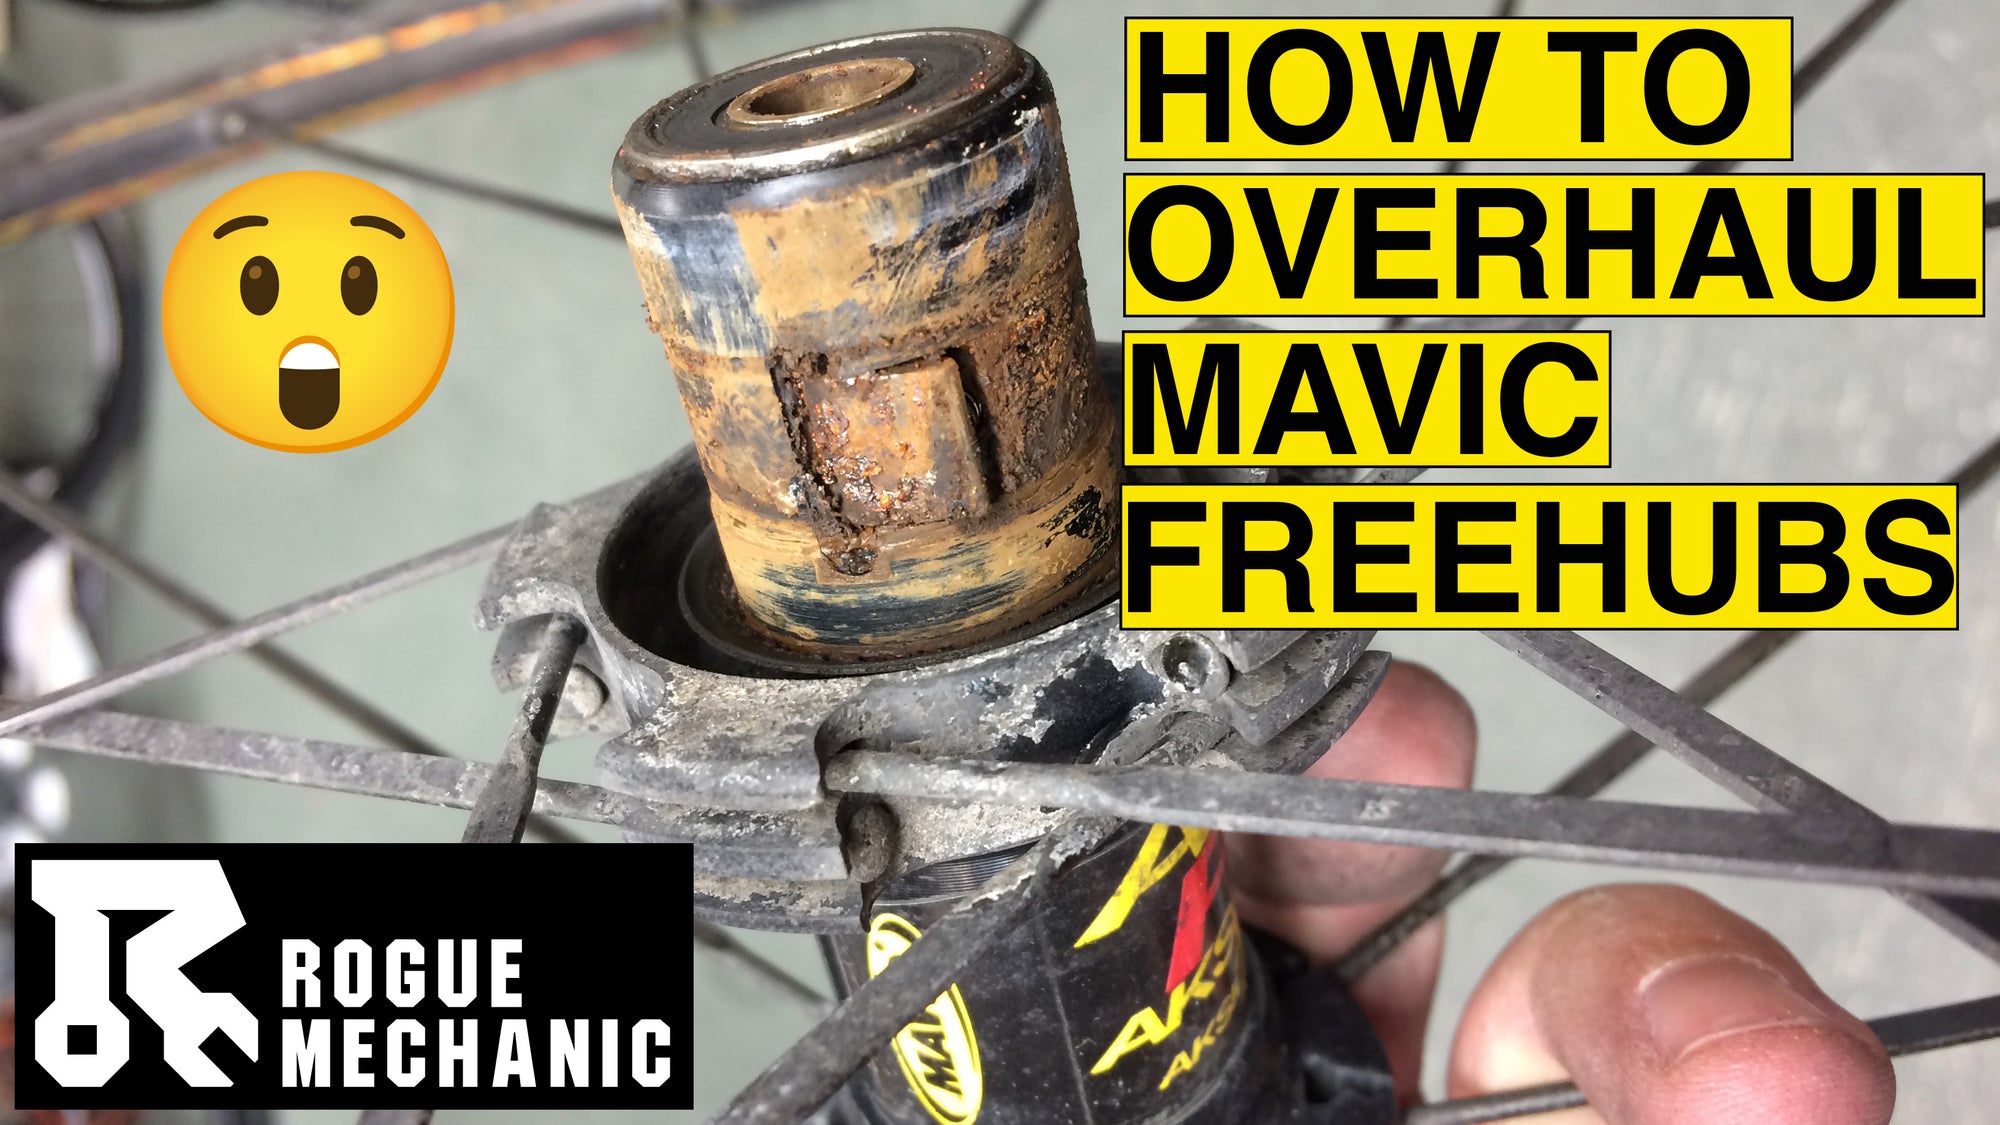 How to Overhaul a Mavic Freehub